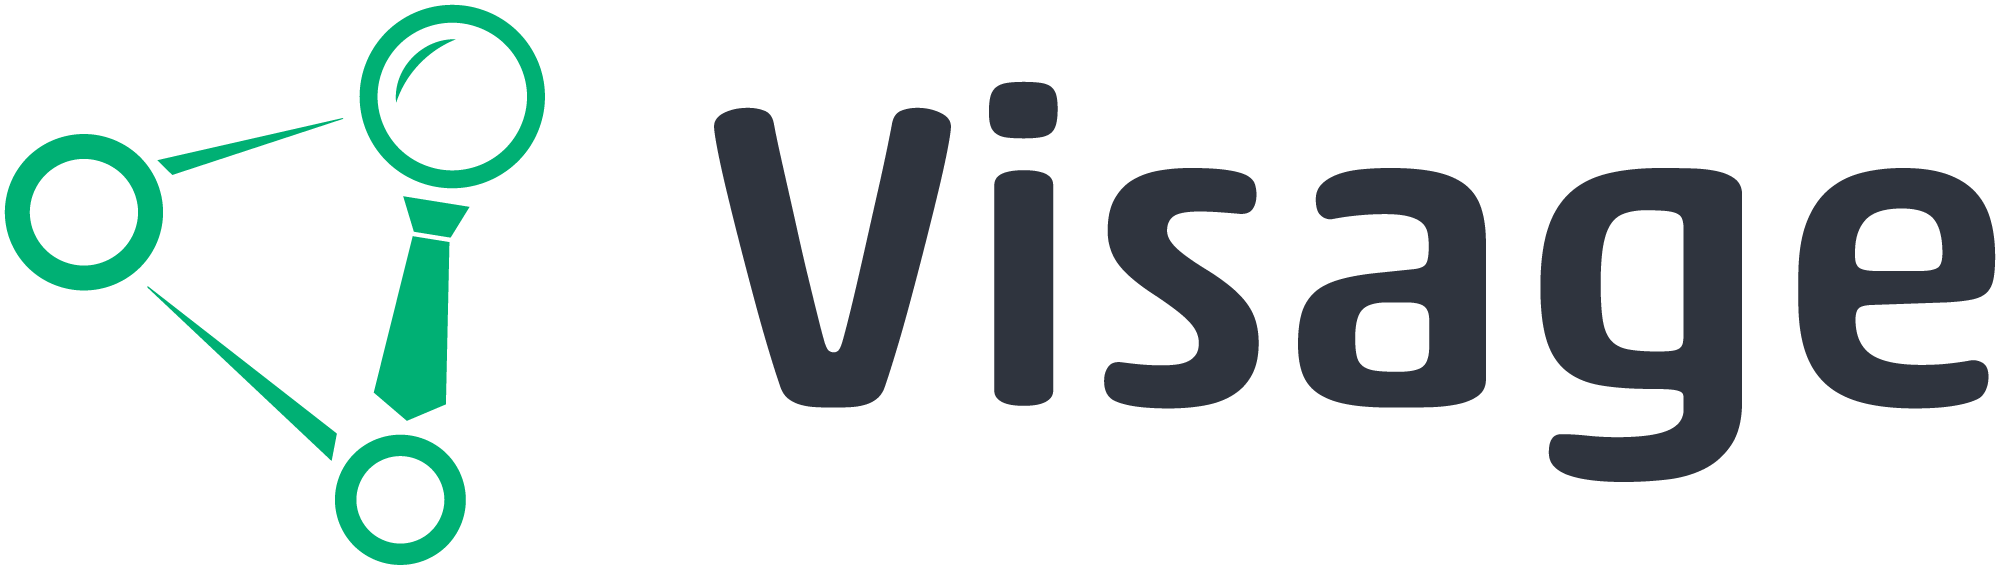 Visage Logo